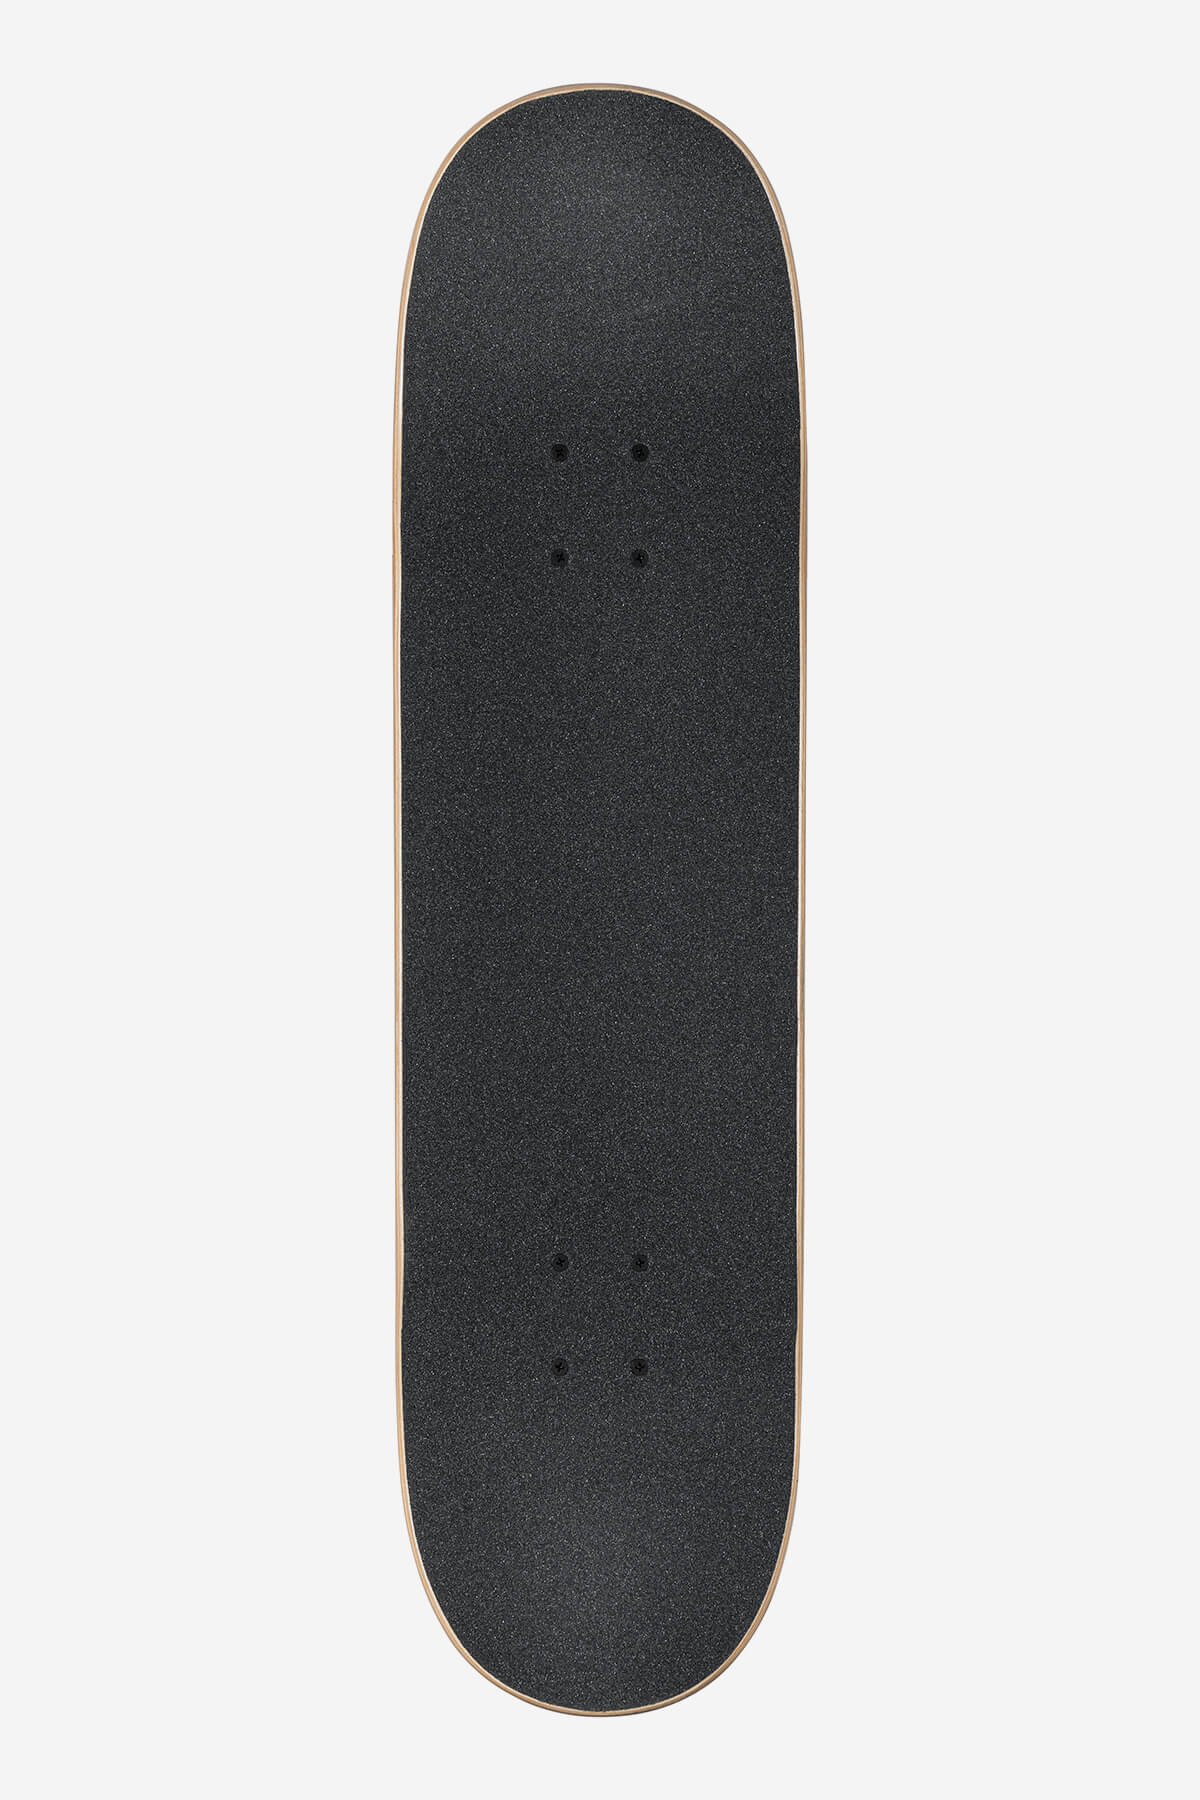 Globe - Goodstock - Neon Blue - 8.375" Complet Skateboard